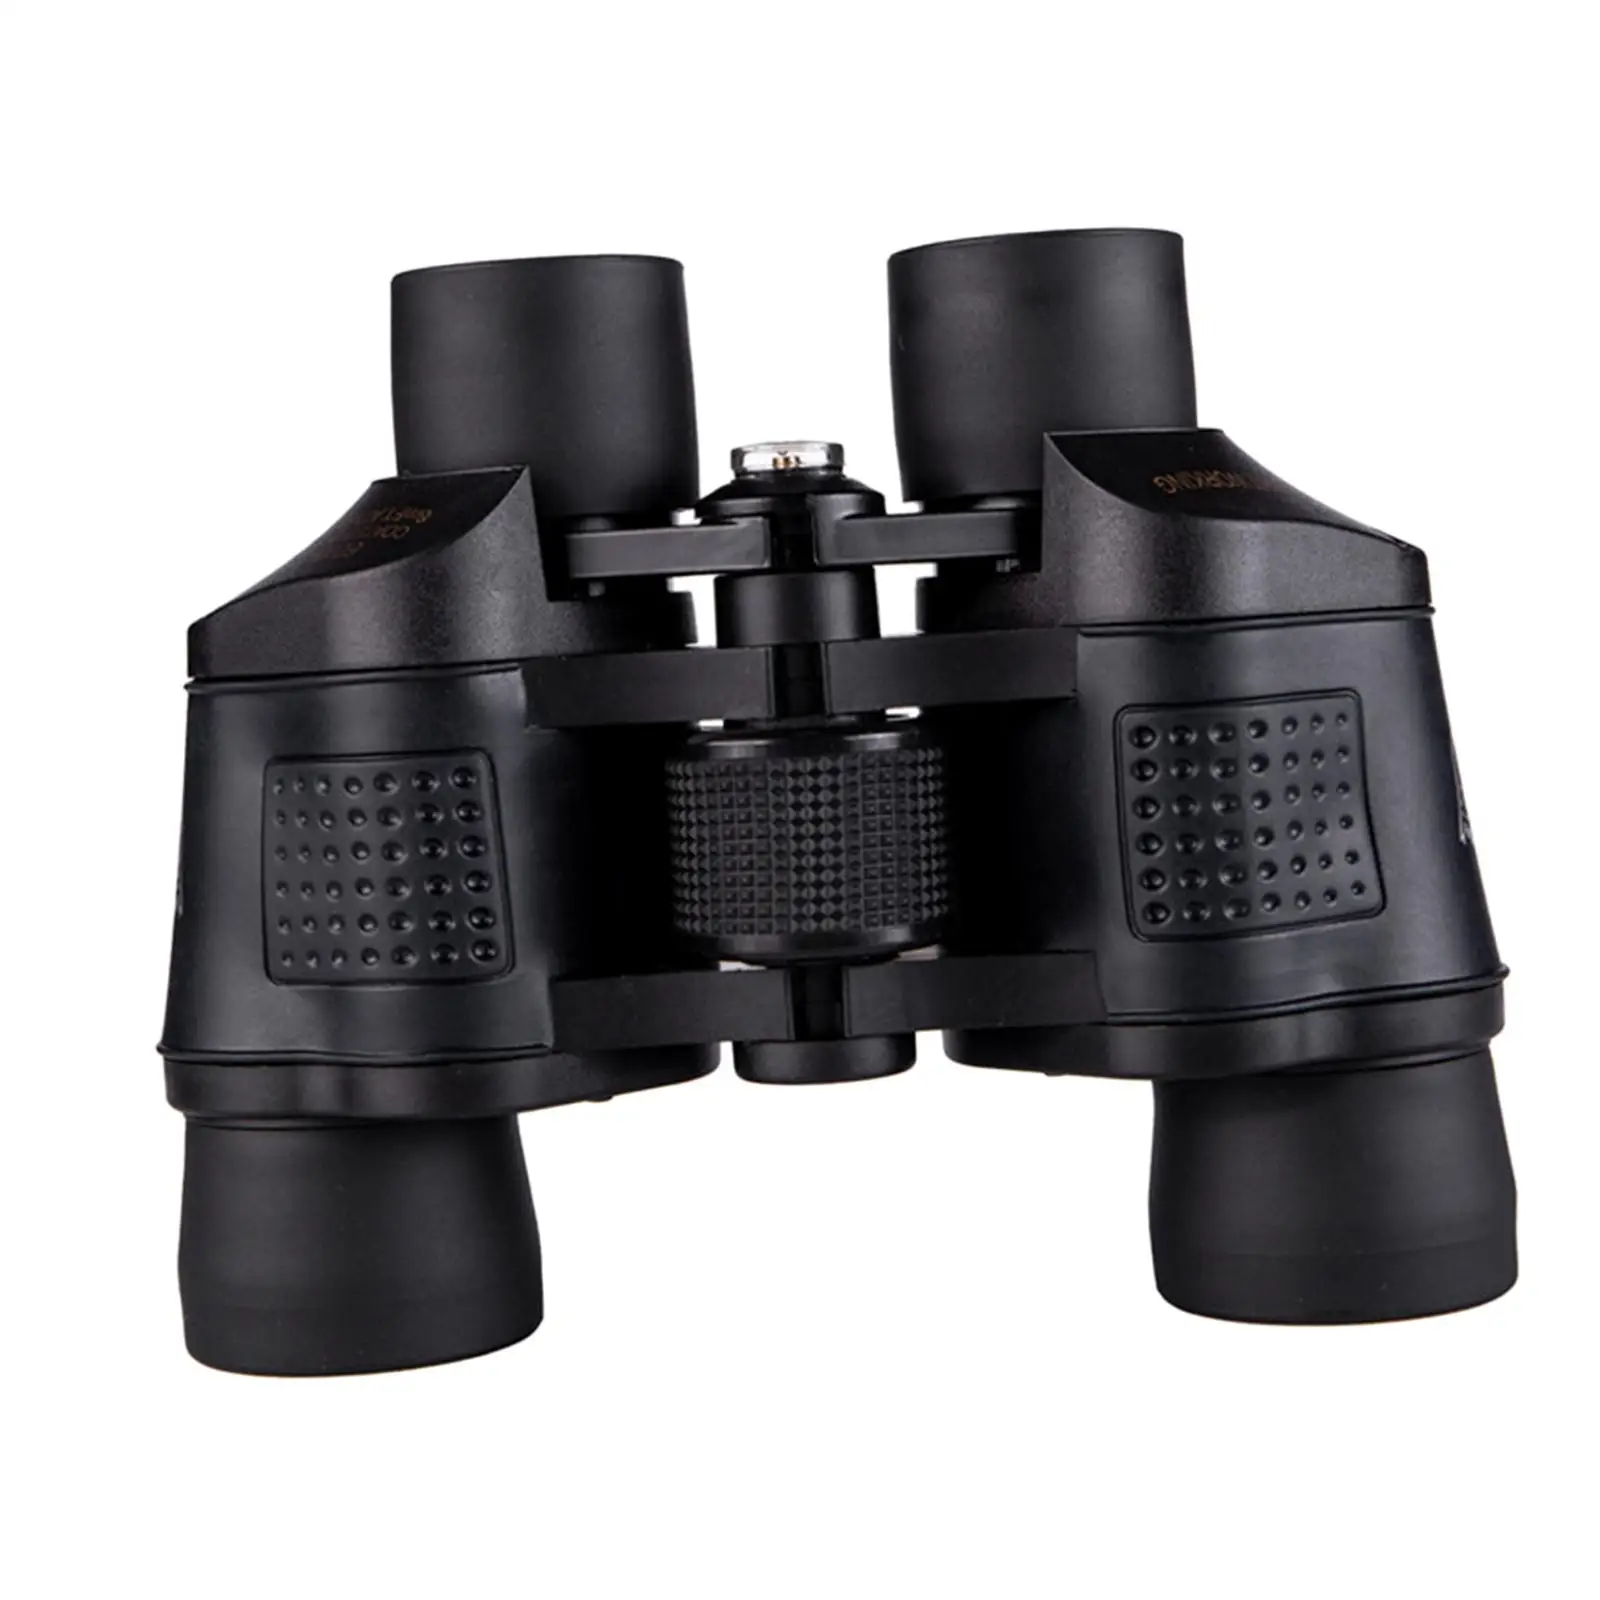 Pocket Binoculars Low Light Sight 60x60 for Hunting Sports Kids Adults Gifts